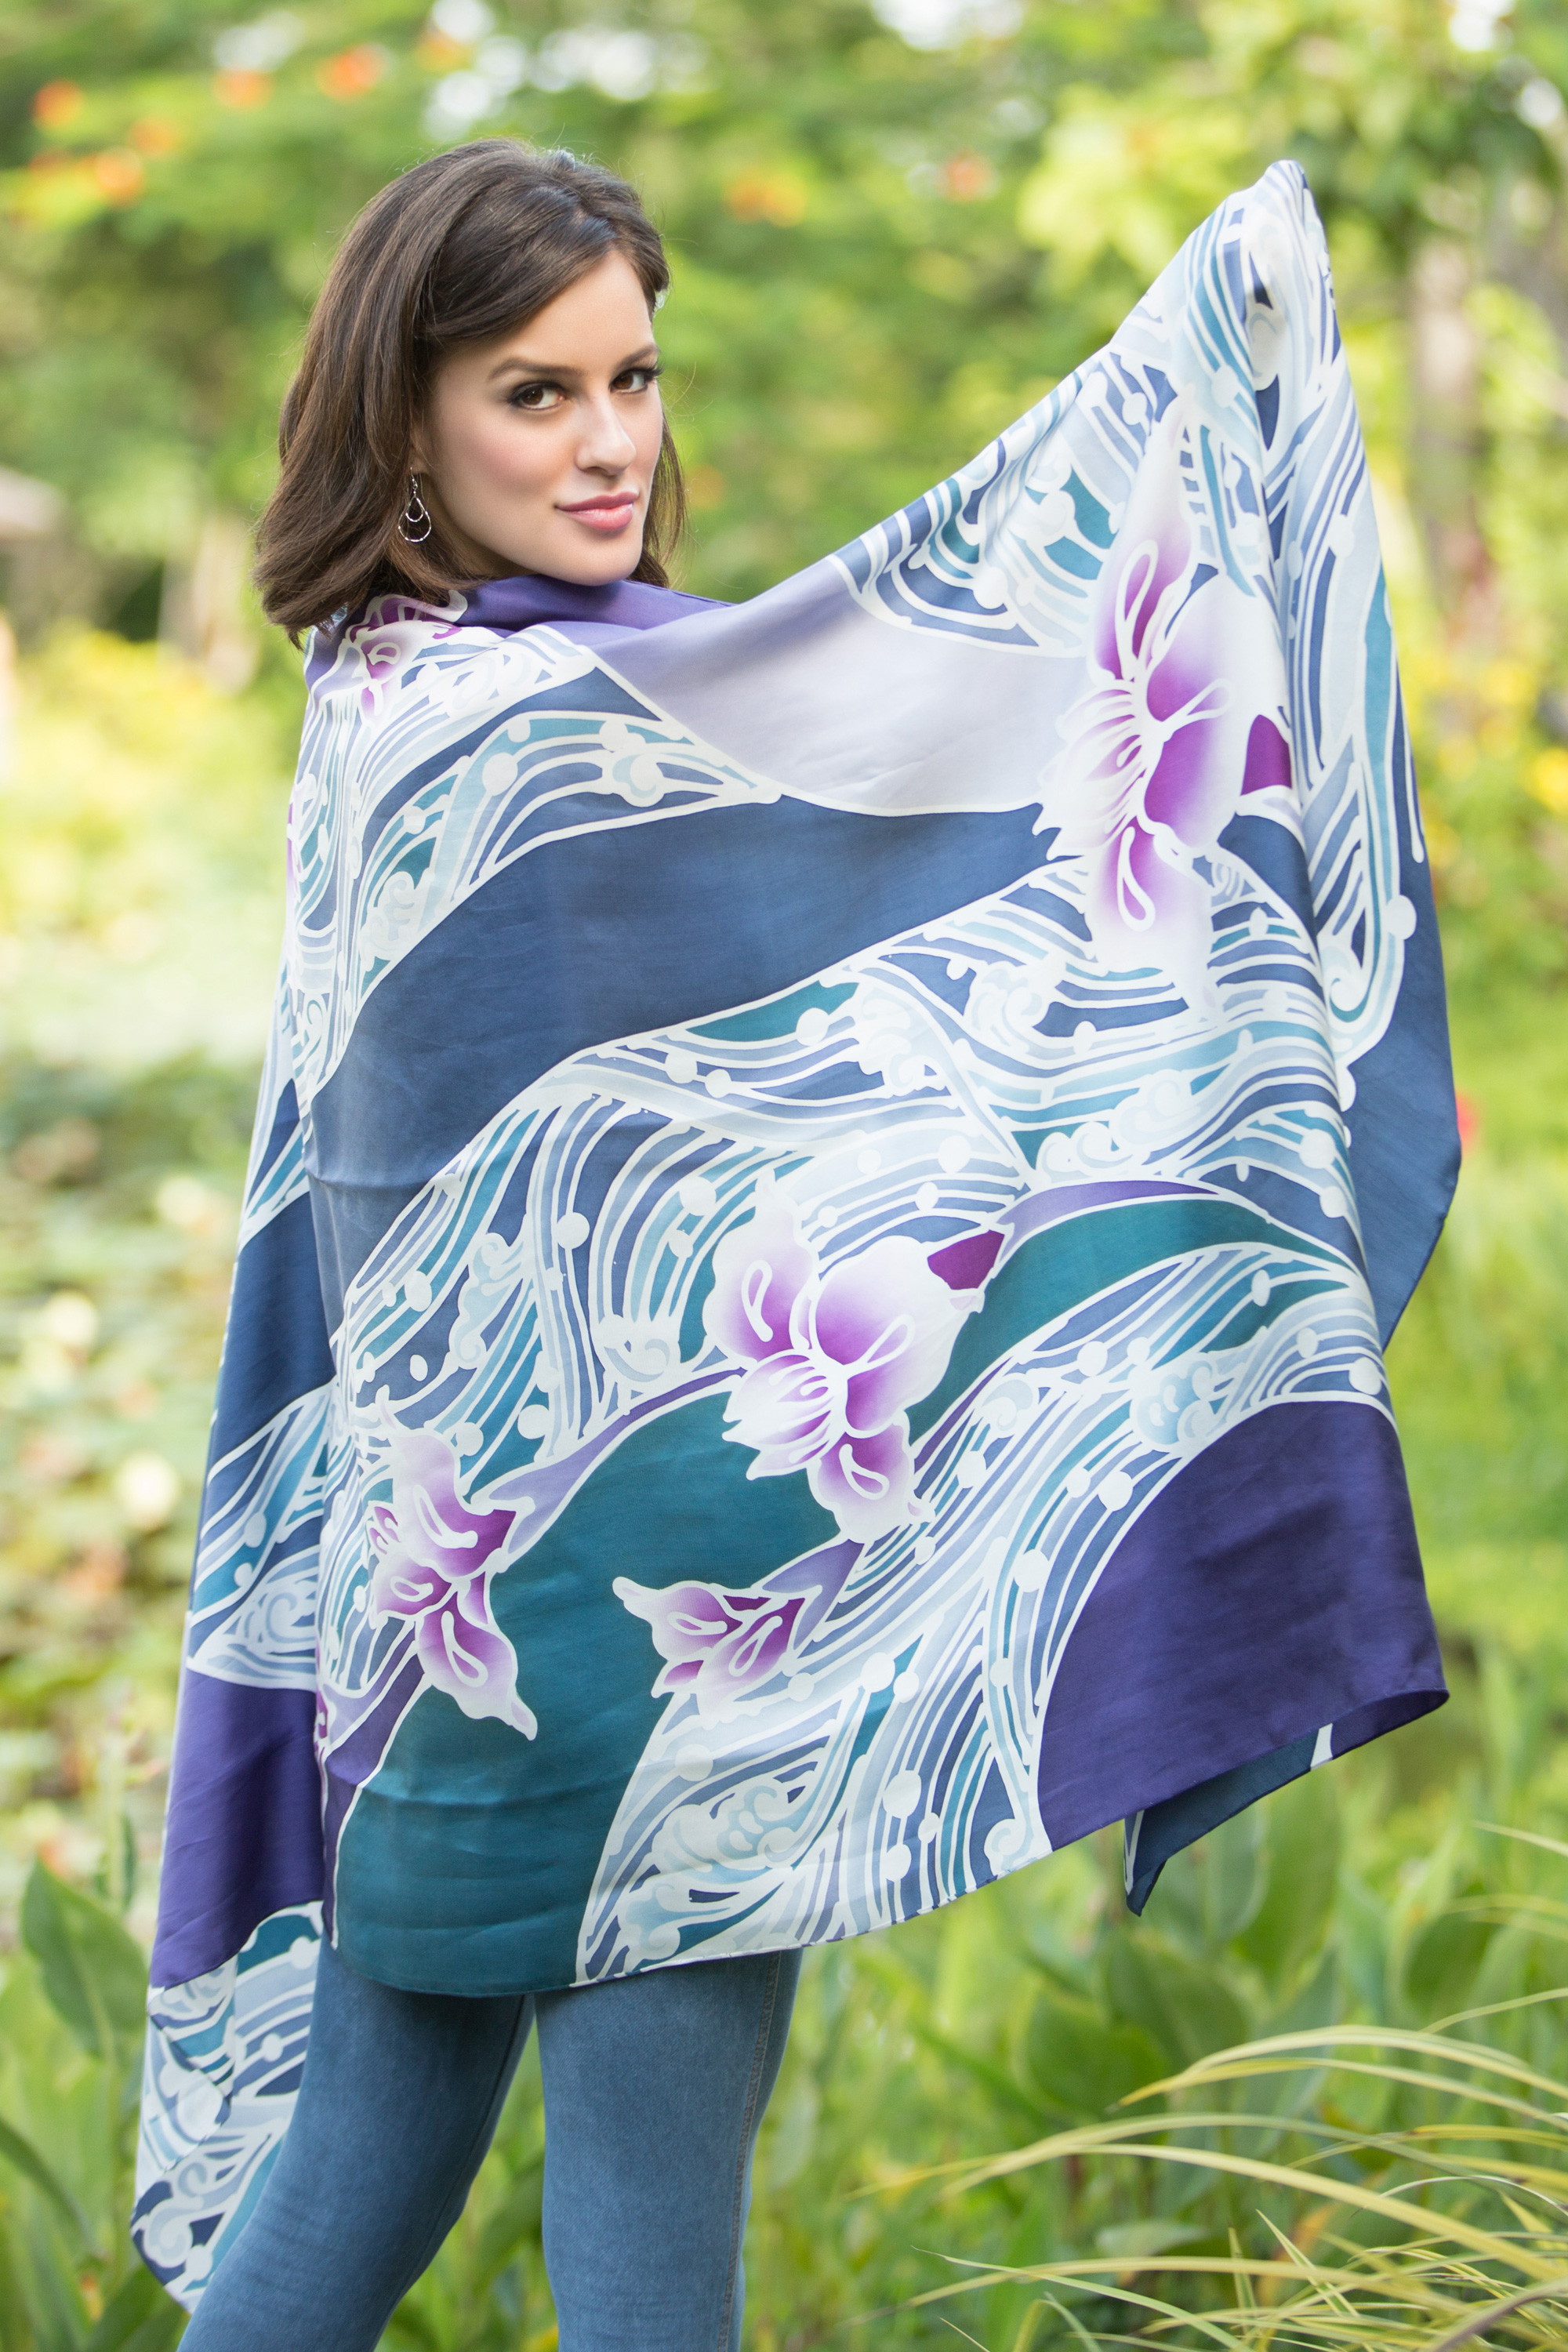 Fair Trade Colourful Light Silky Tie-Dye Batik Beaded Long Scarf Wrap Shawl 